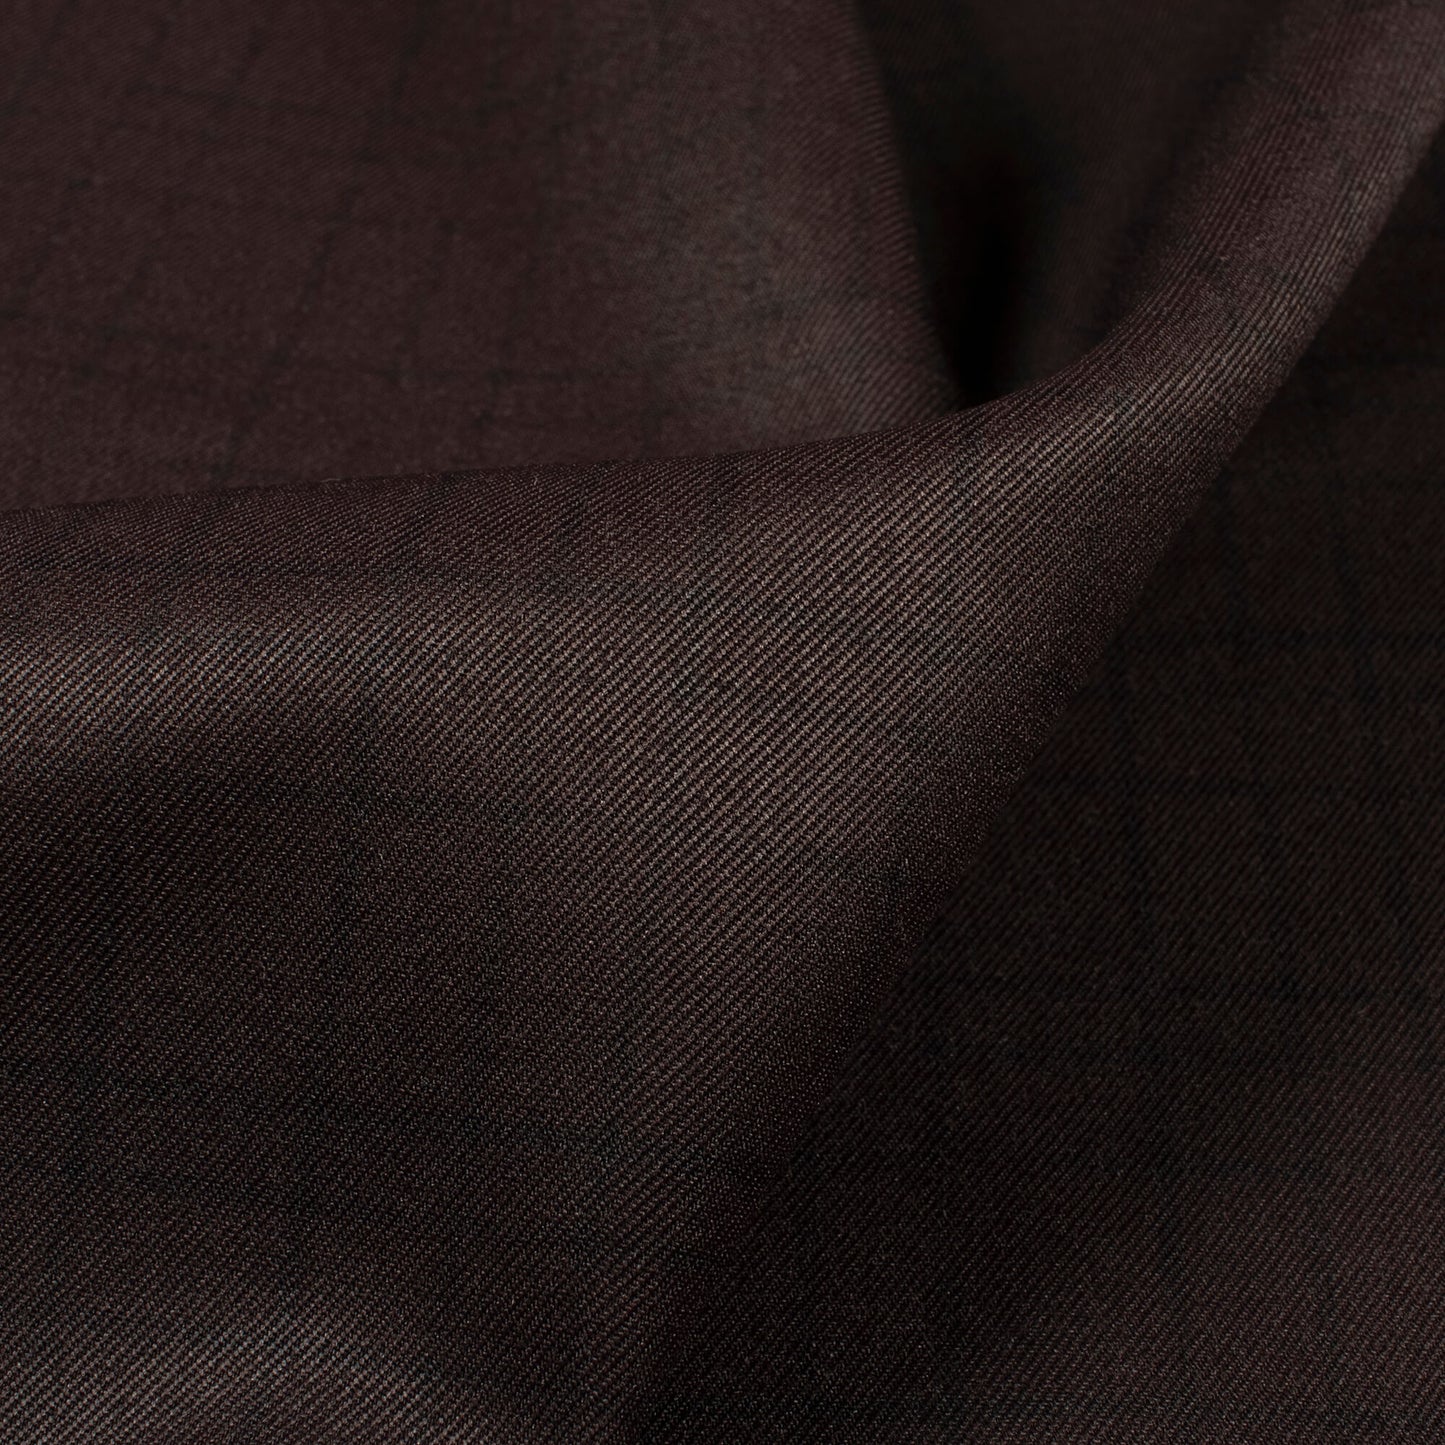 Dark Brown Checks Printed Luxury Suiting Fabric